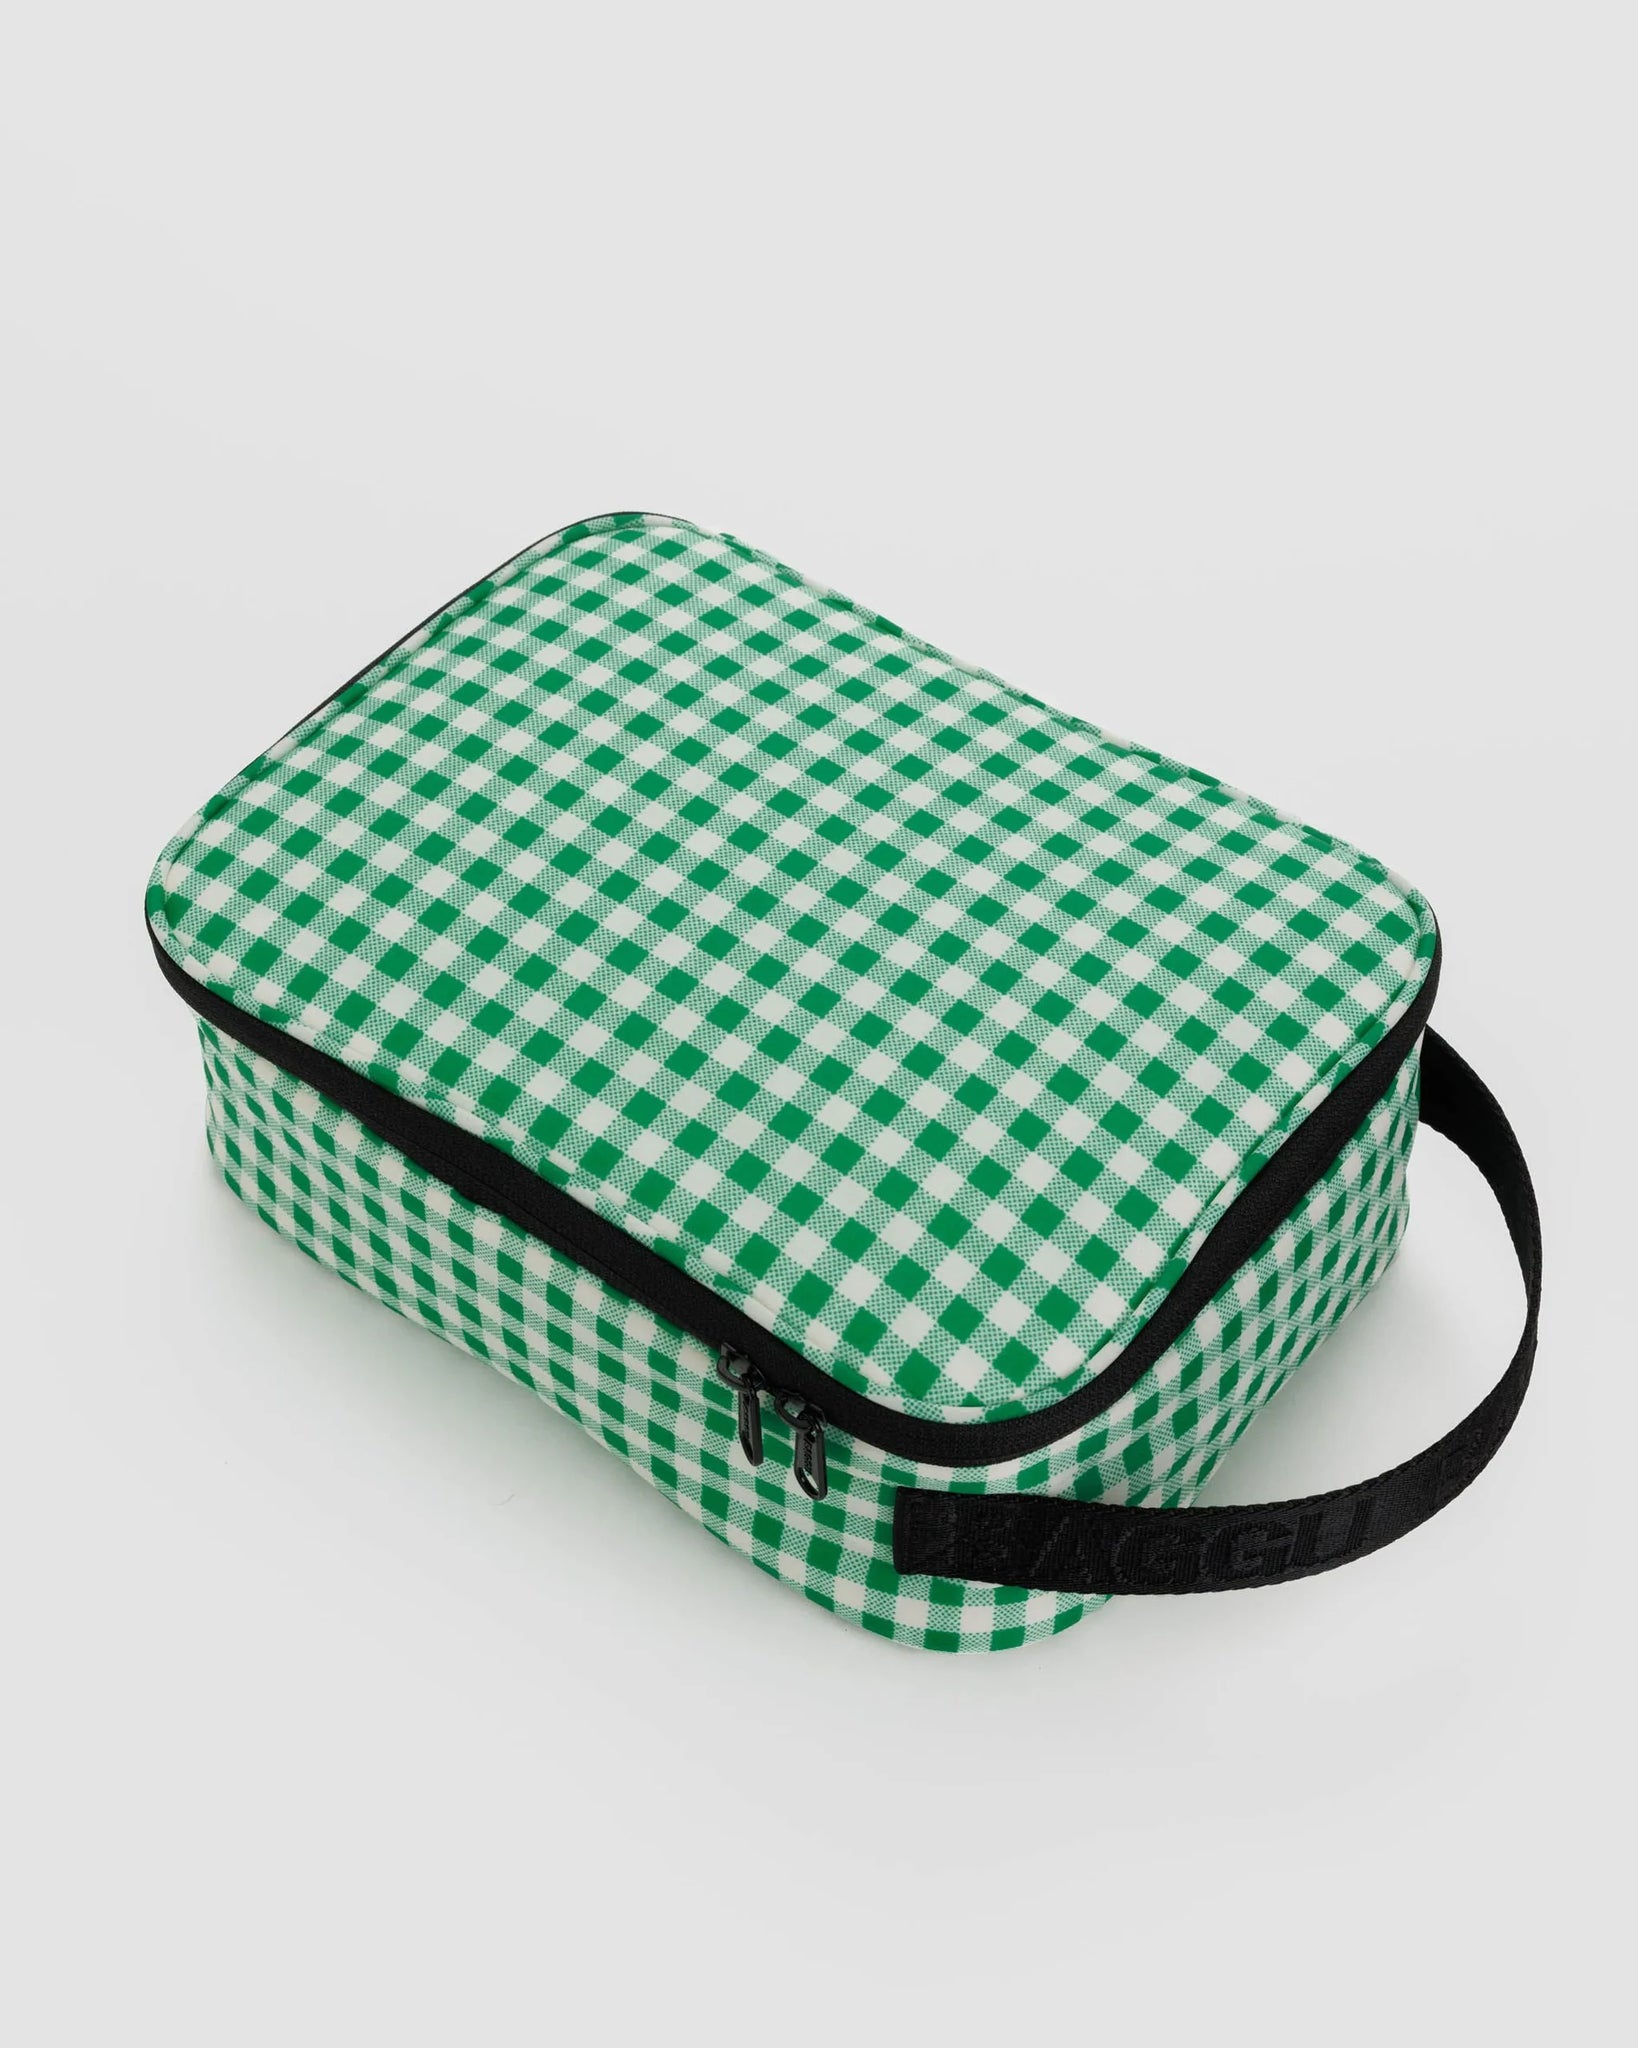 Baggu Lunch Box - Green Gingham